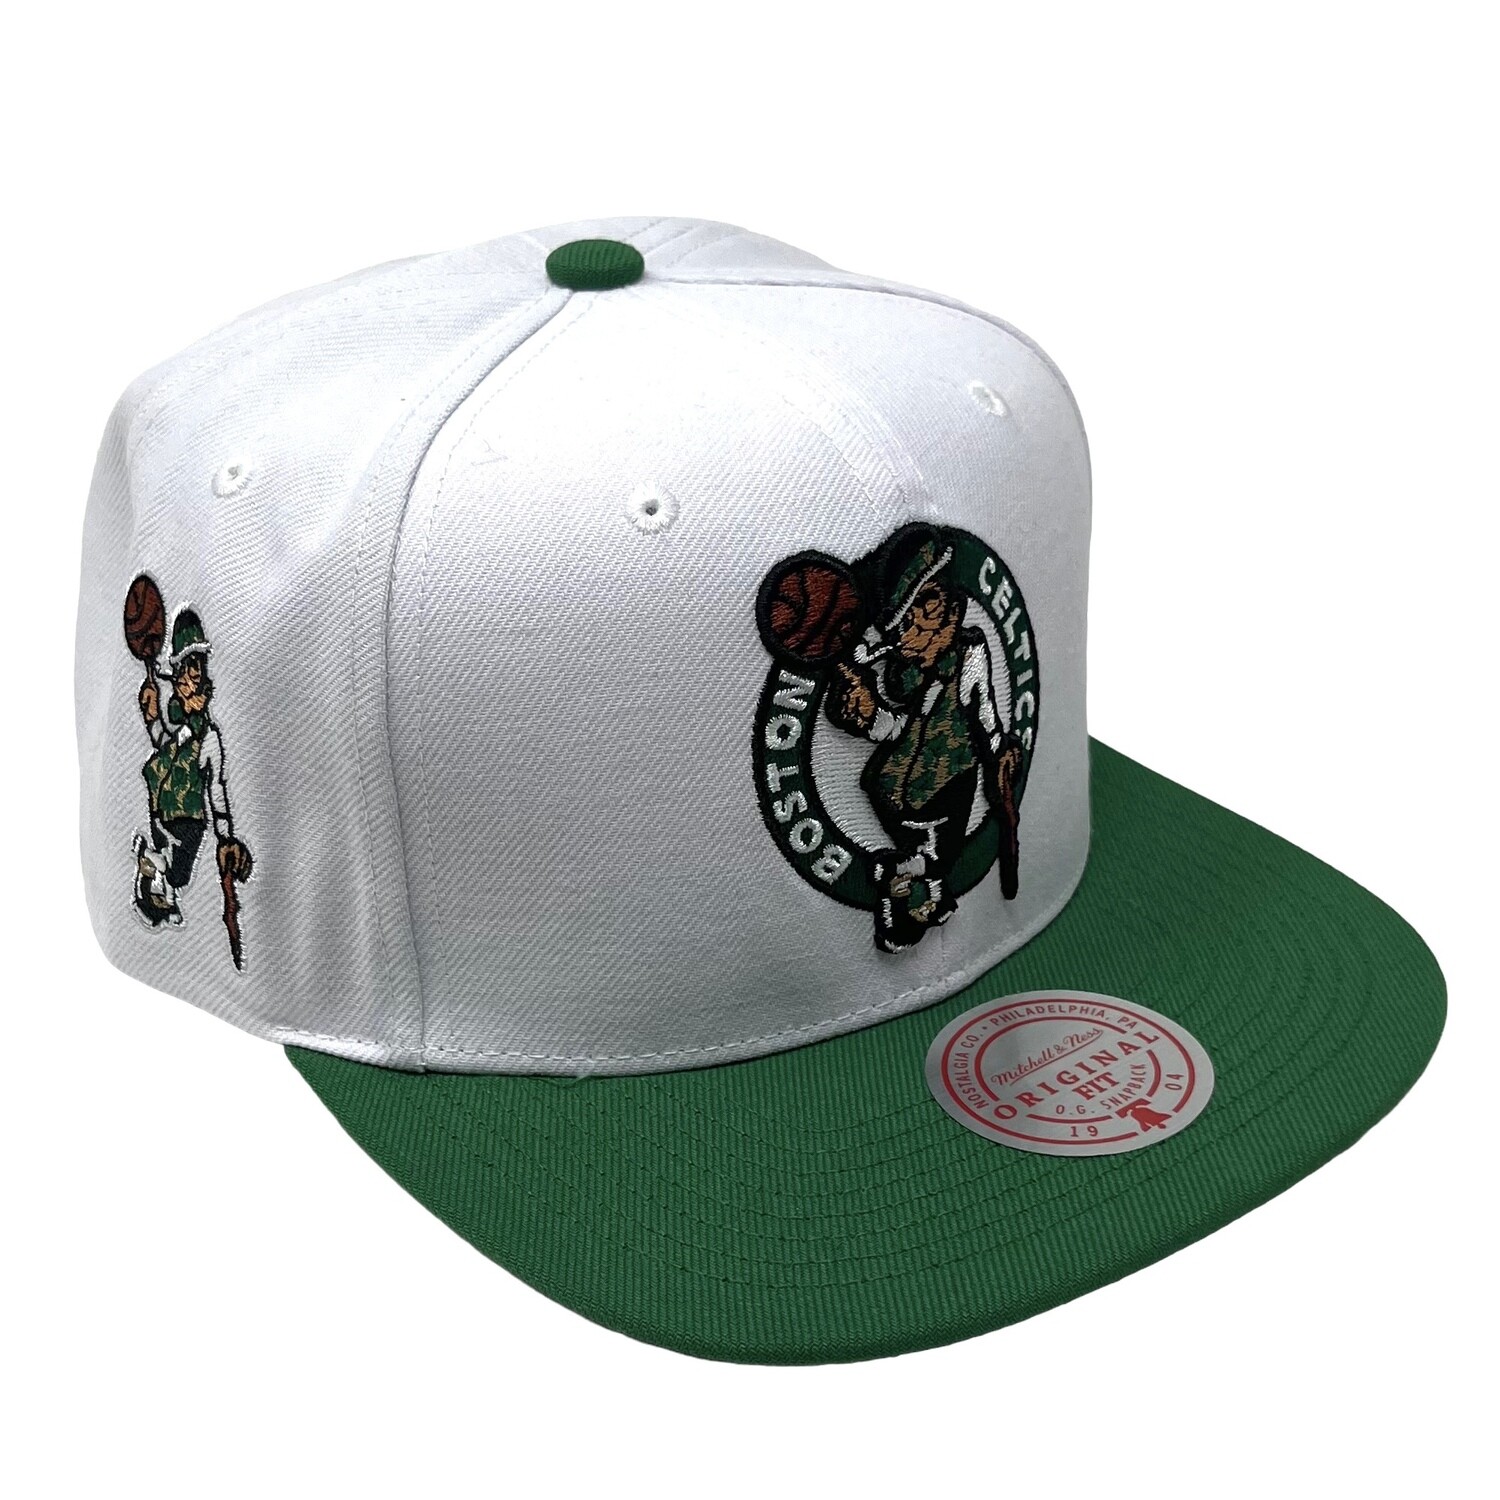 Mitchell & Ness Boston Celtics Snapback Hat Cap Green NBA Shorts Hooks Black